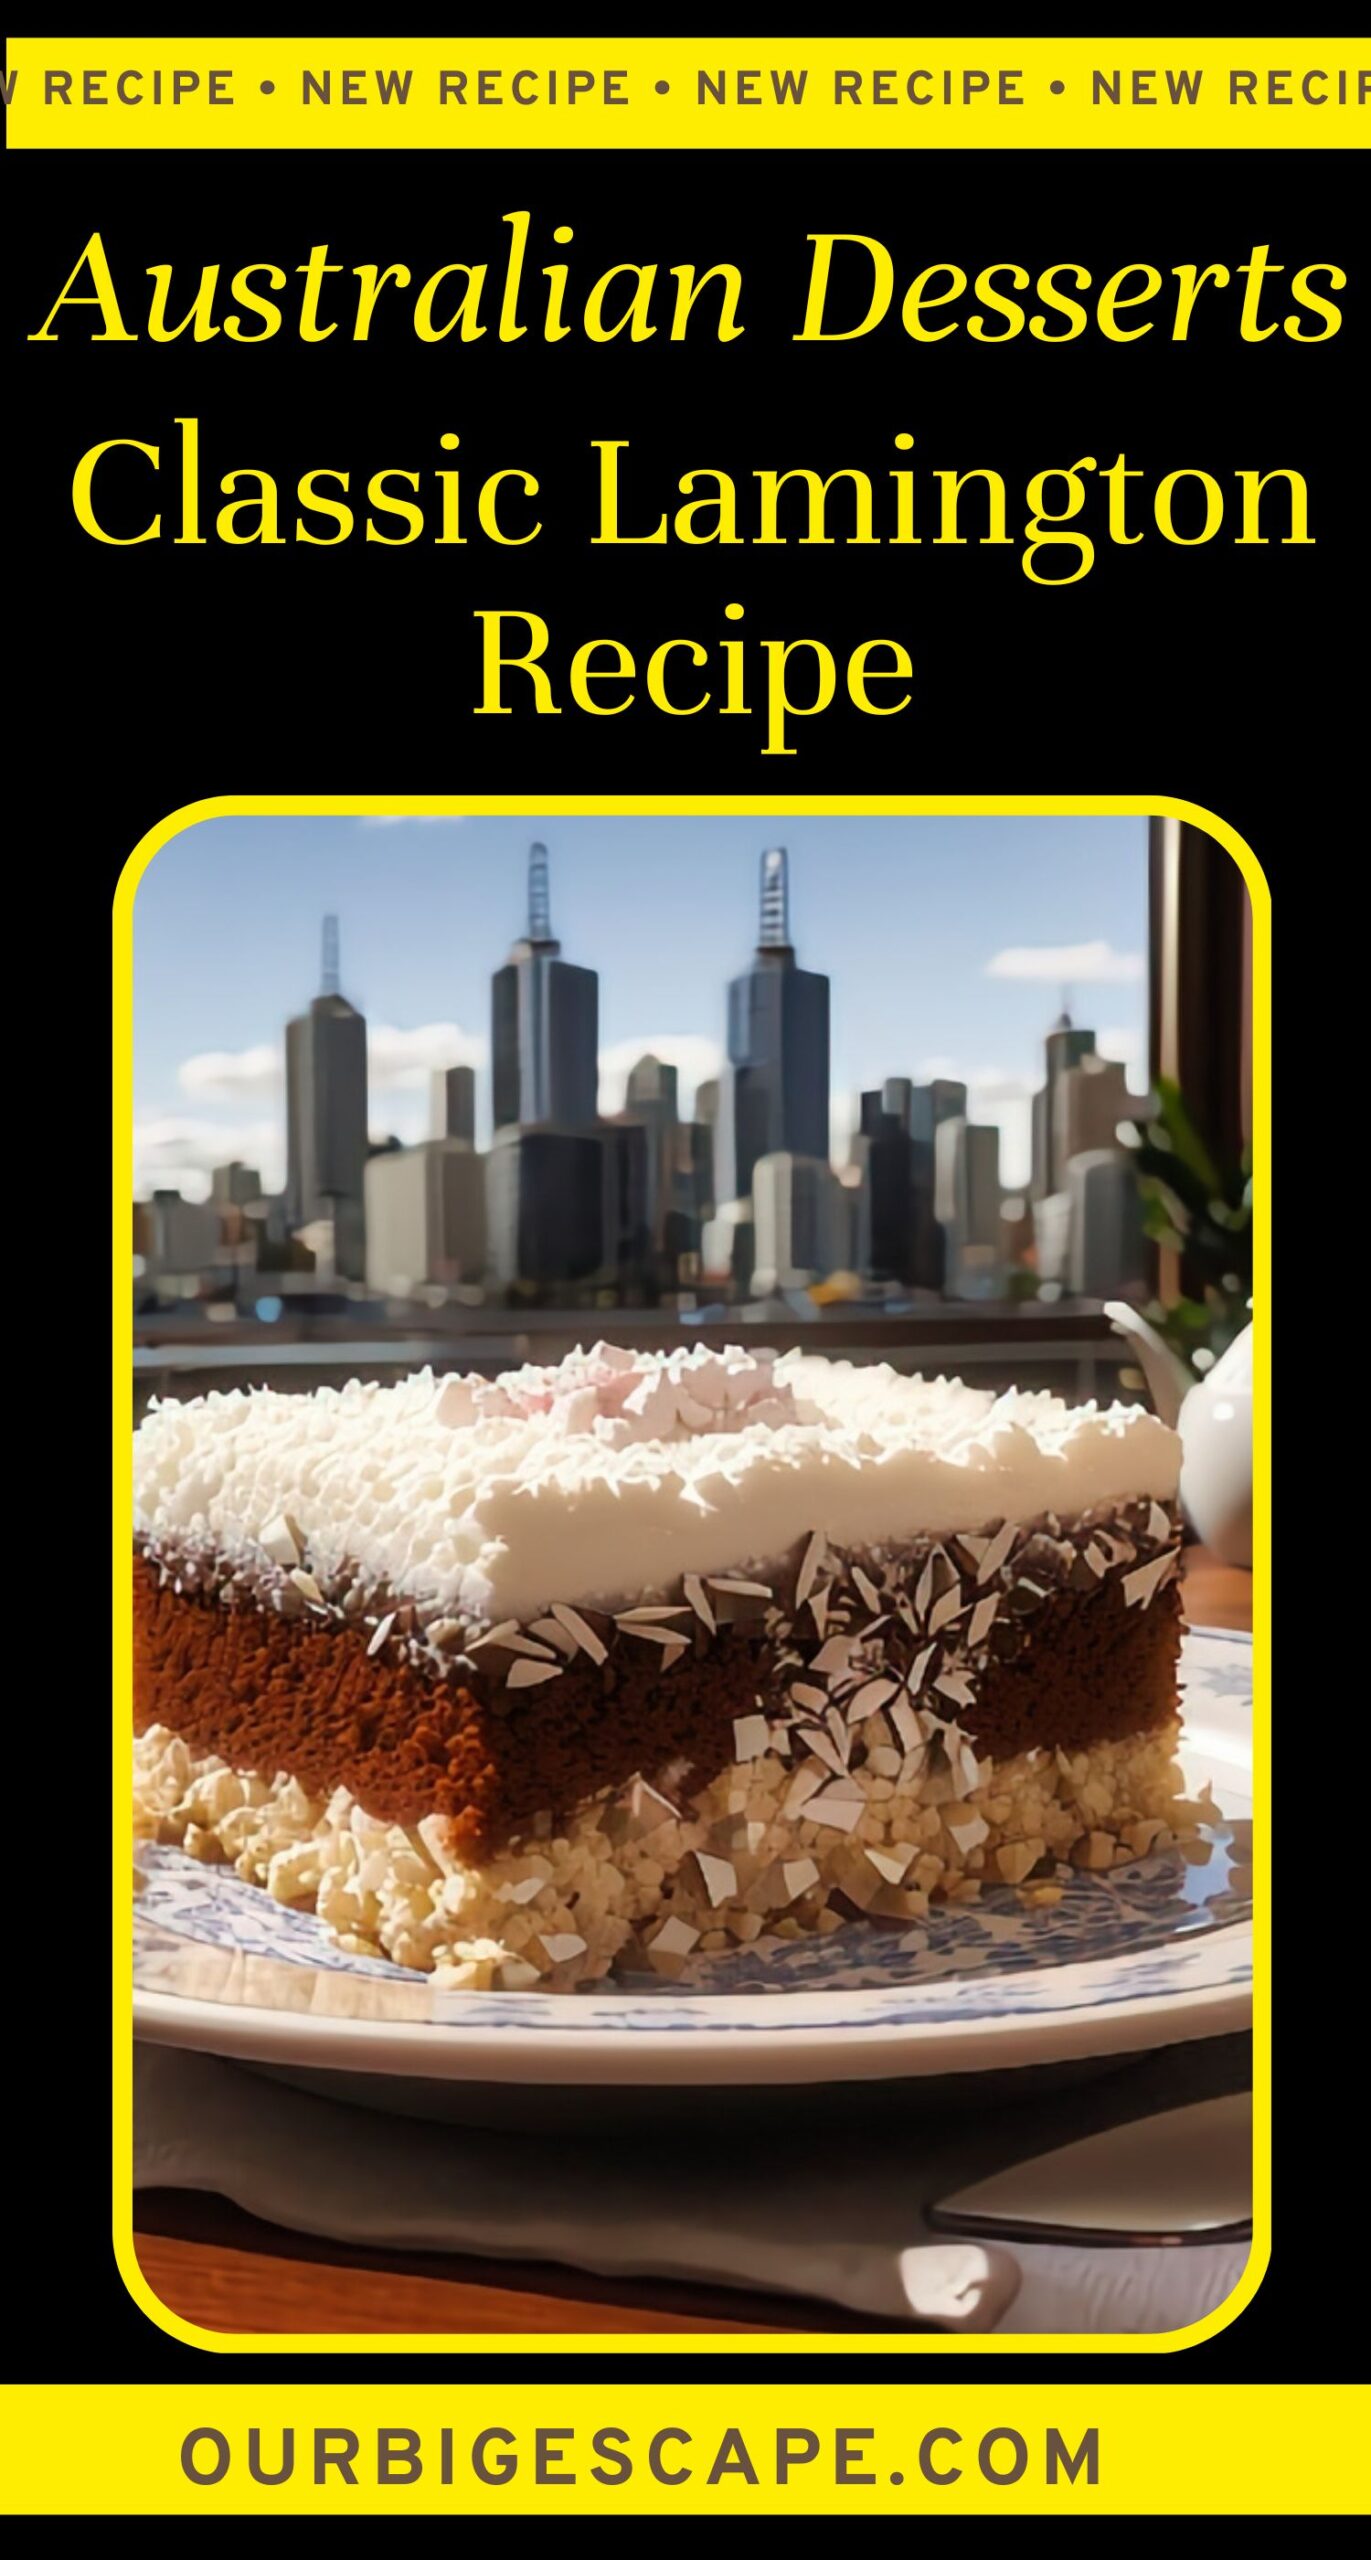 5. Australian Classic Lamington Recipe